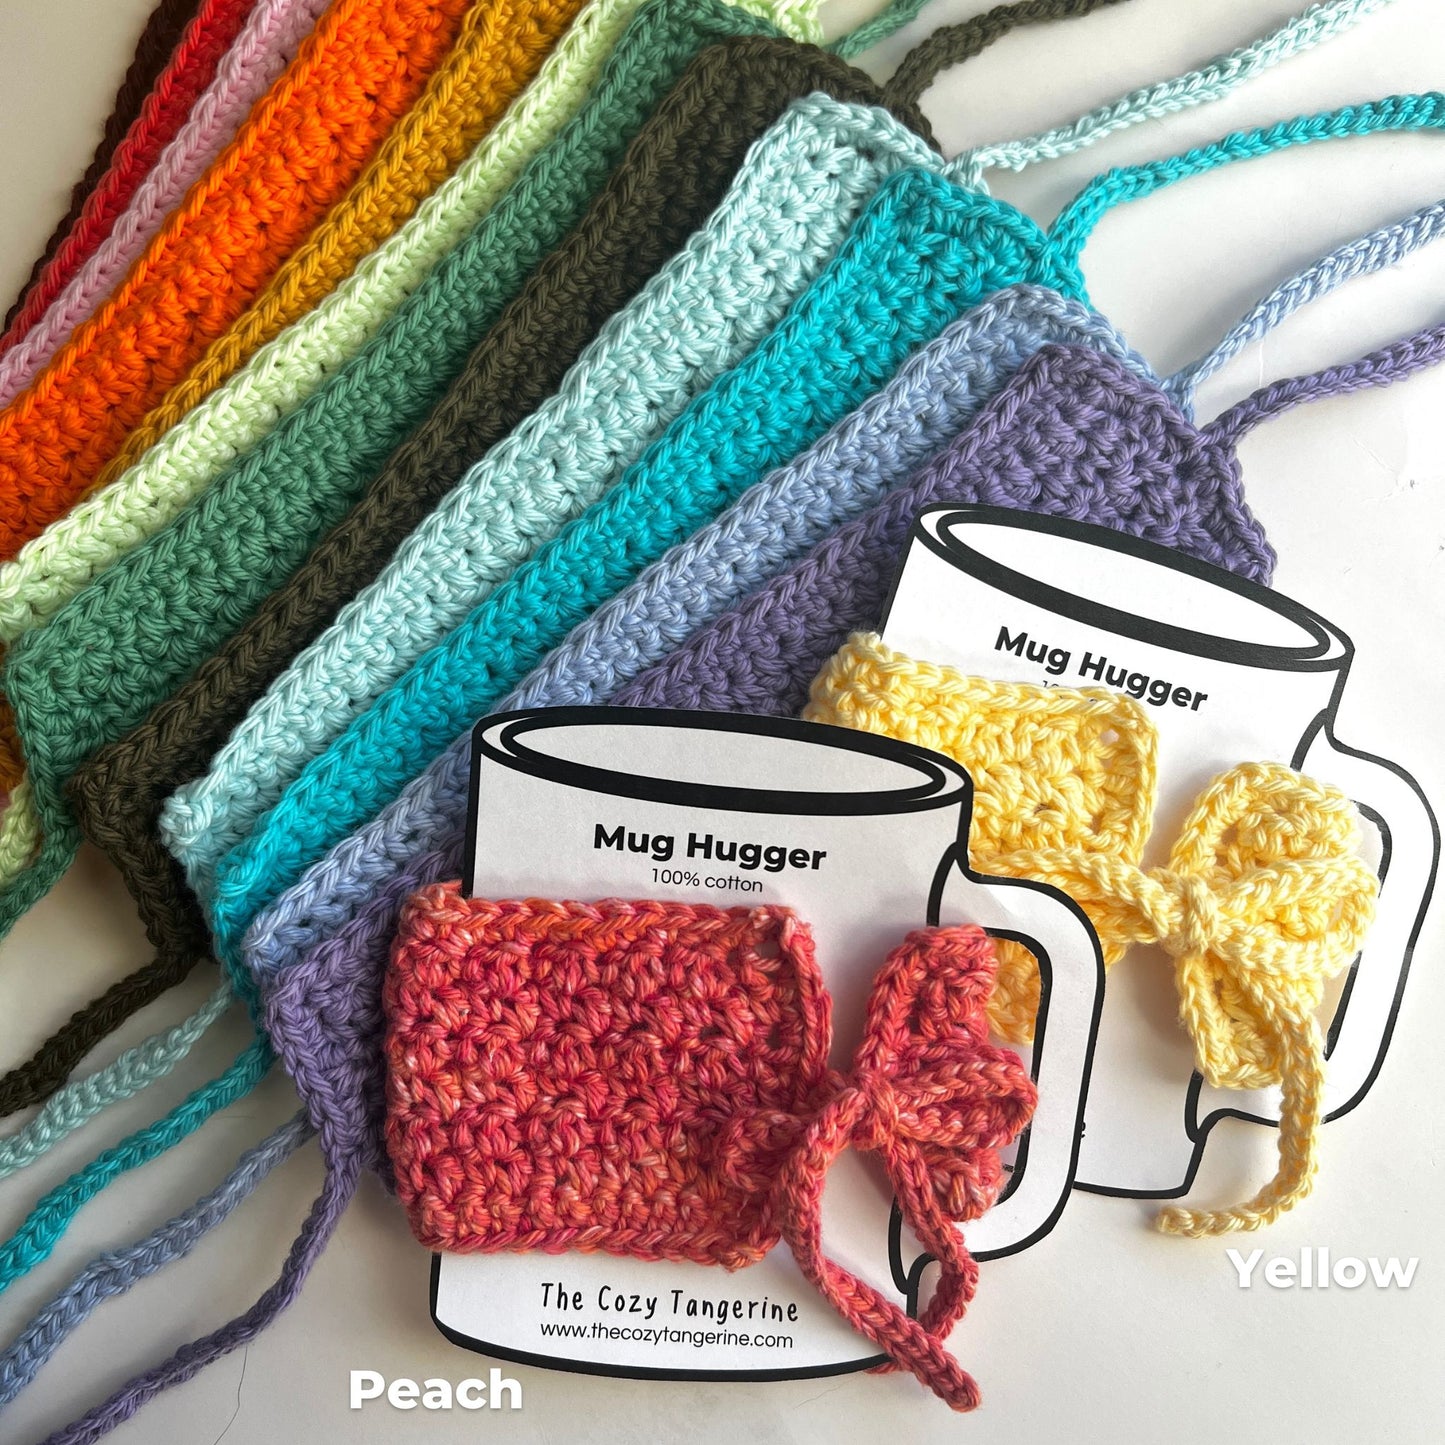 mug hugger koozie colors. gifts for coffee lovers